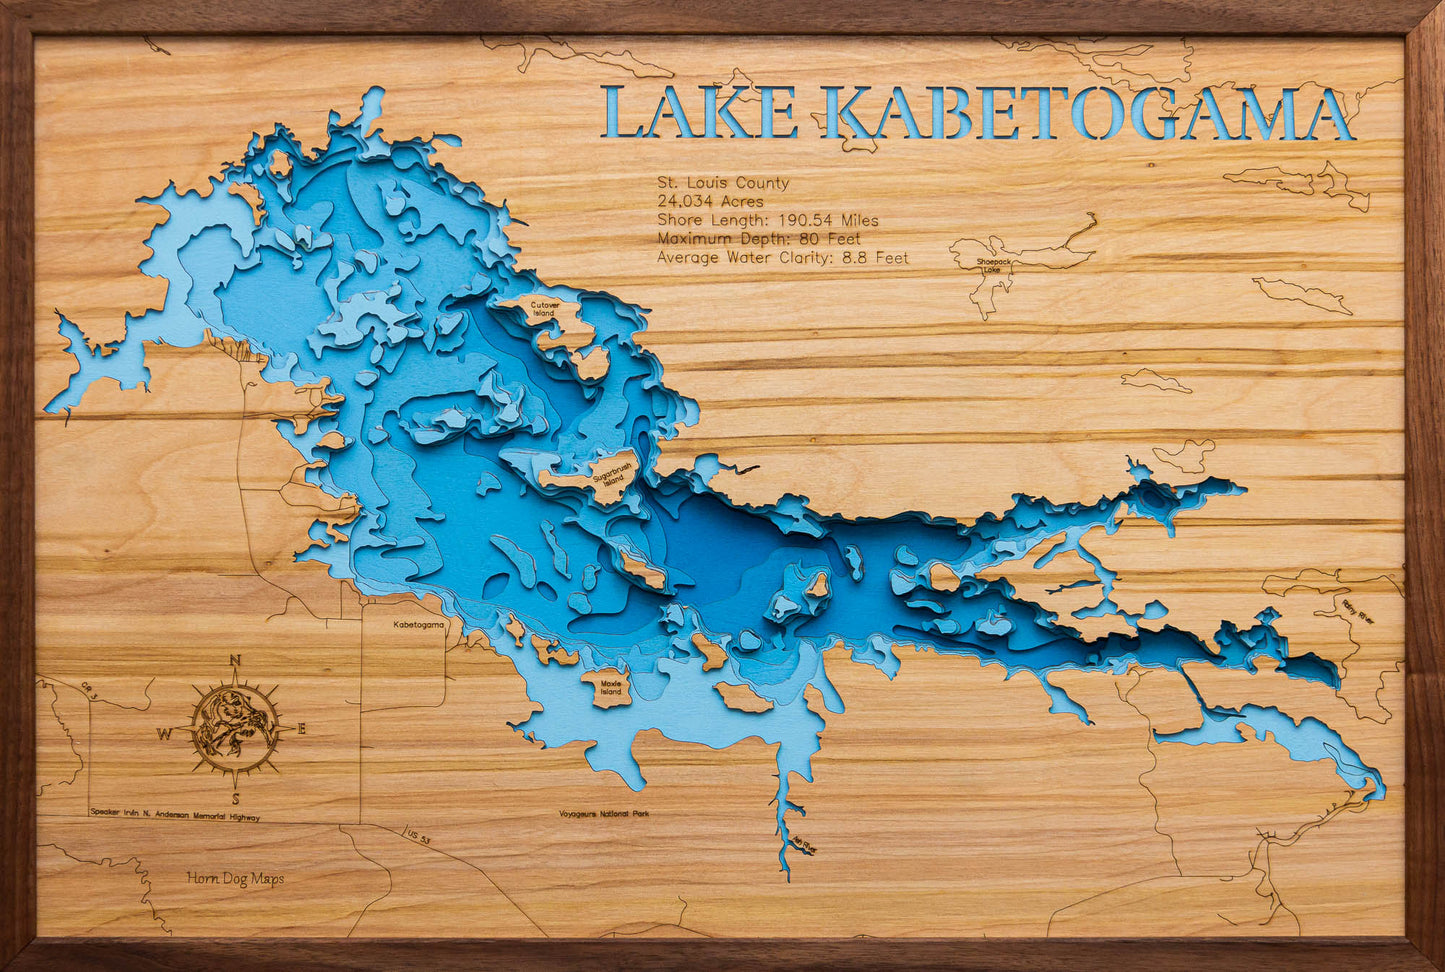 Kabetogama Lake in St. Louis County, Minnesota